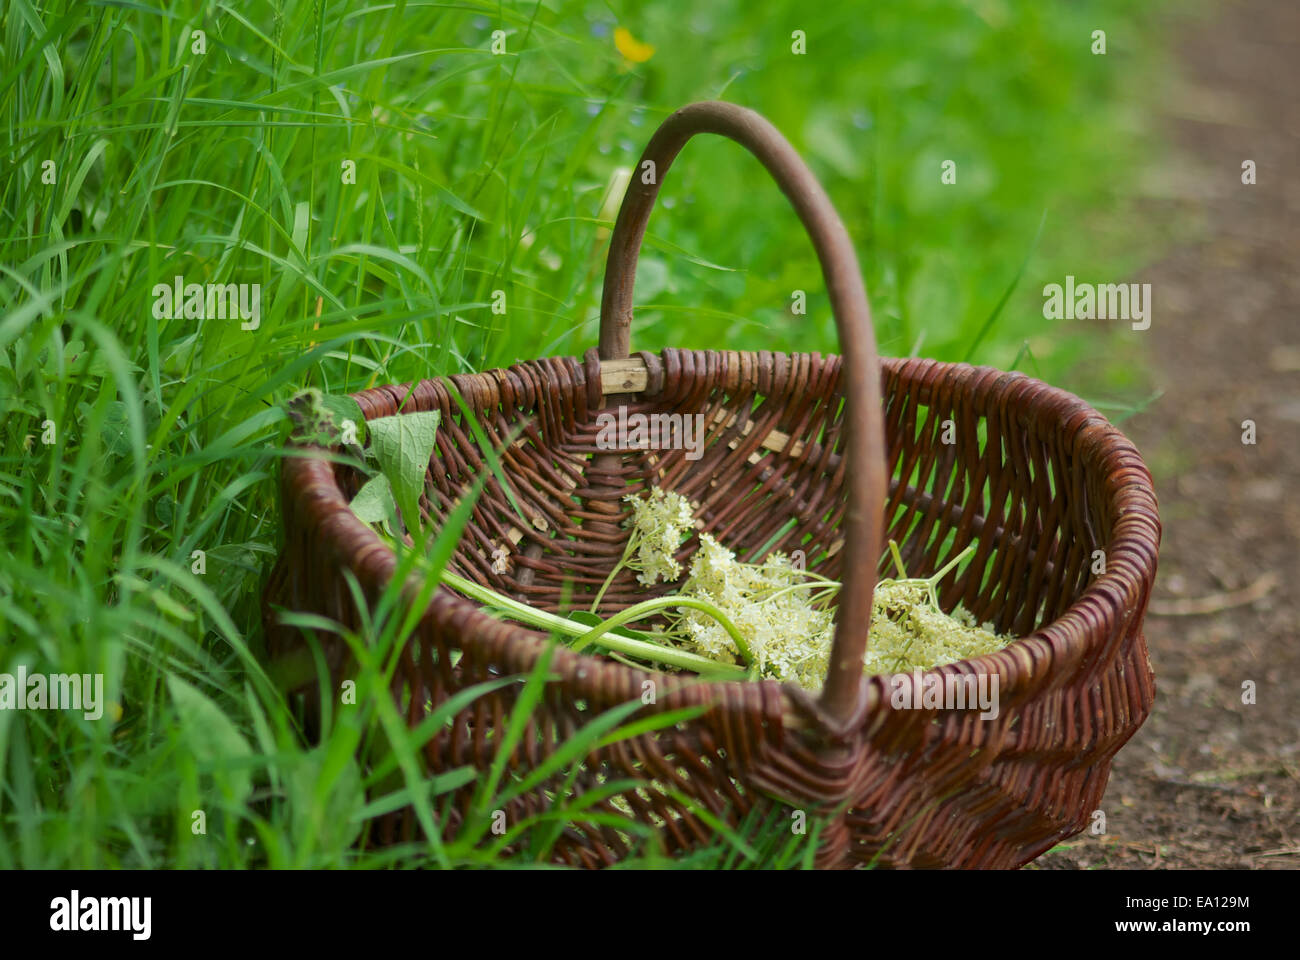 Eatable wild herbs Stock Photo